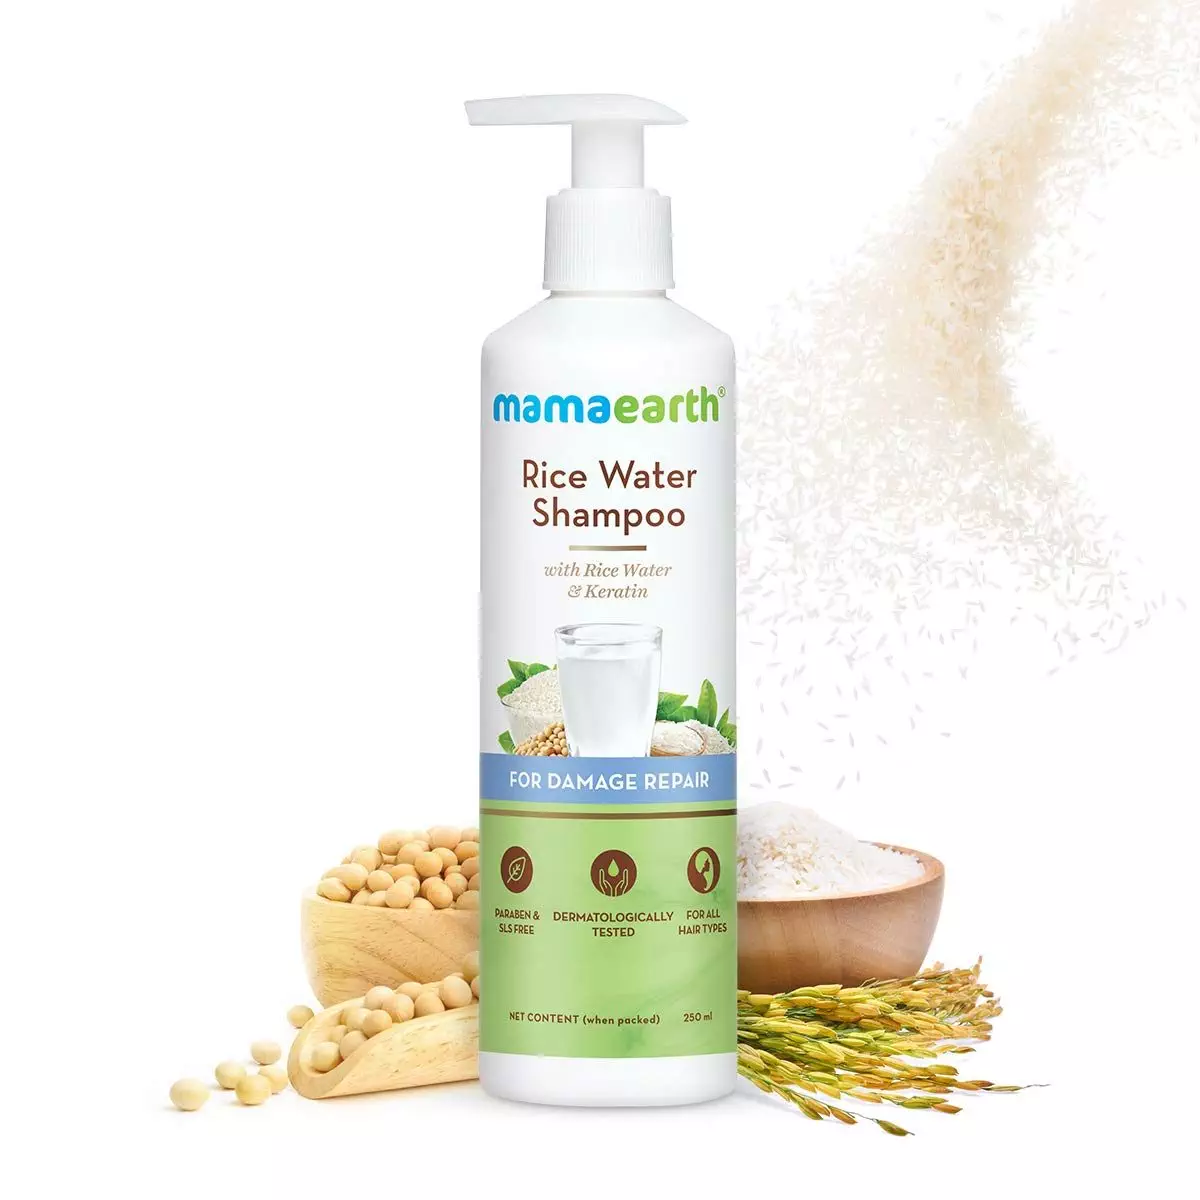 Mamaearth Rice Water Shampoo Review 8